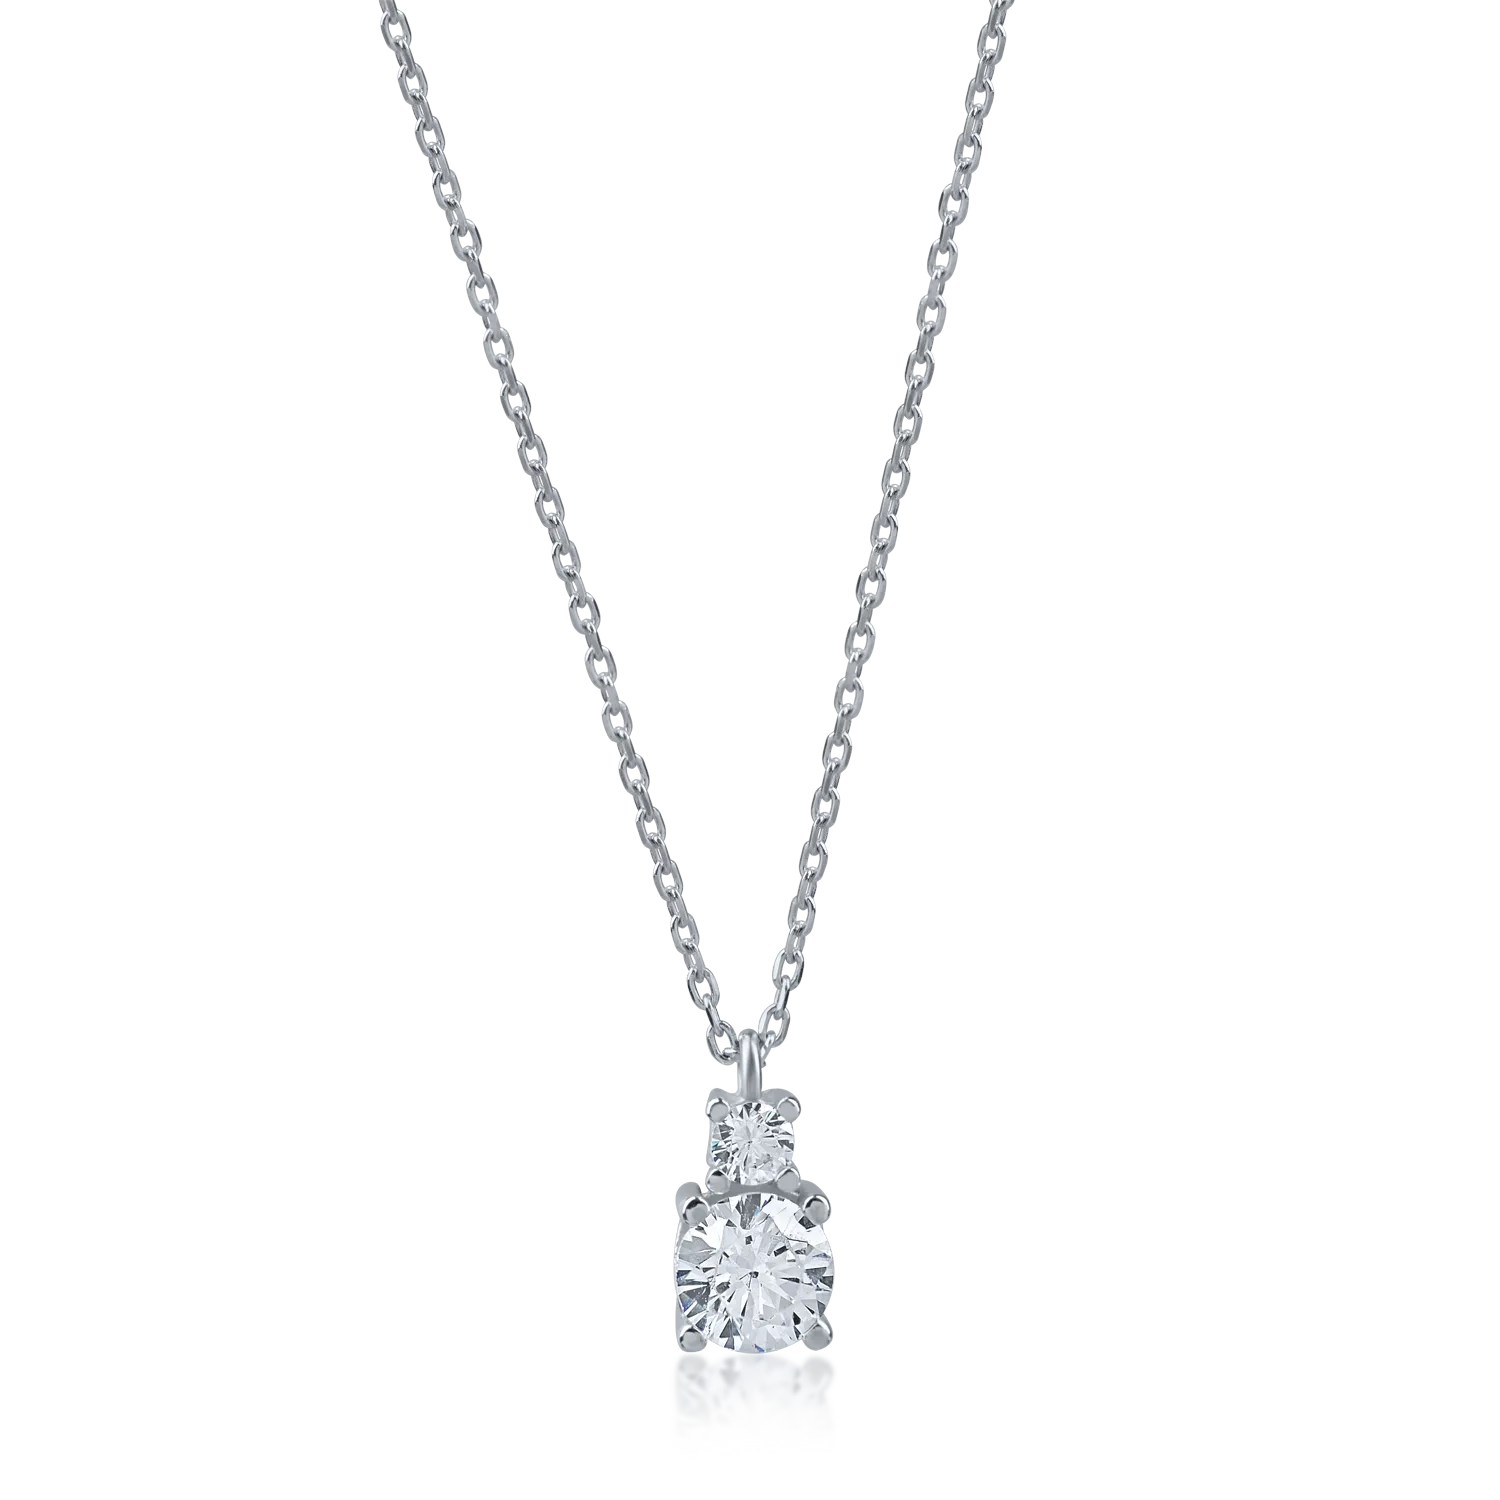 White gold minimalist pendant necklace with zirconia